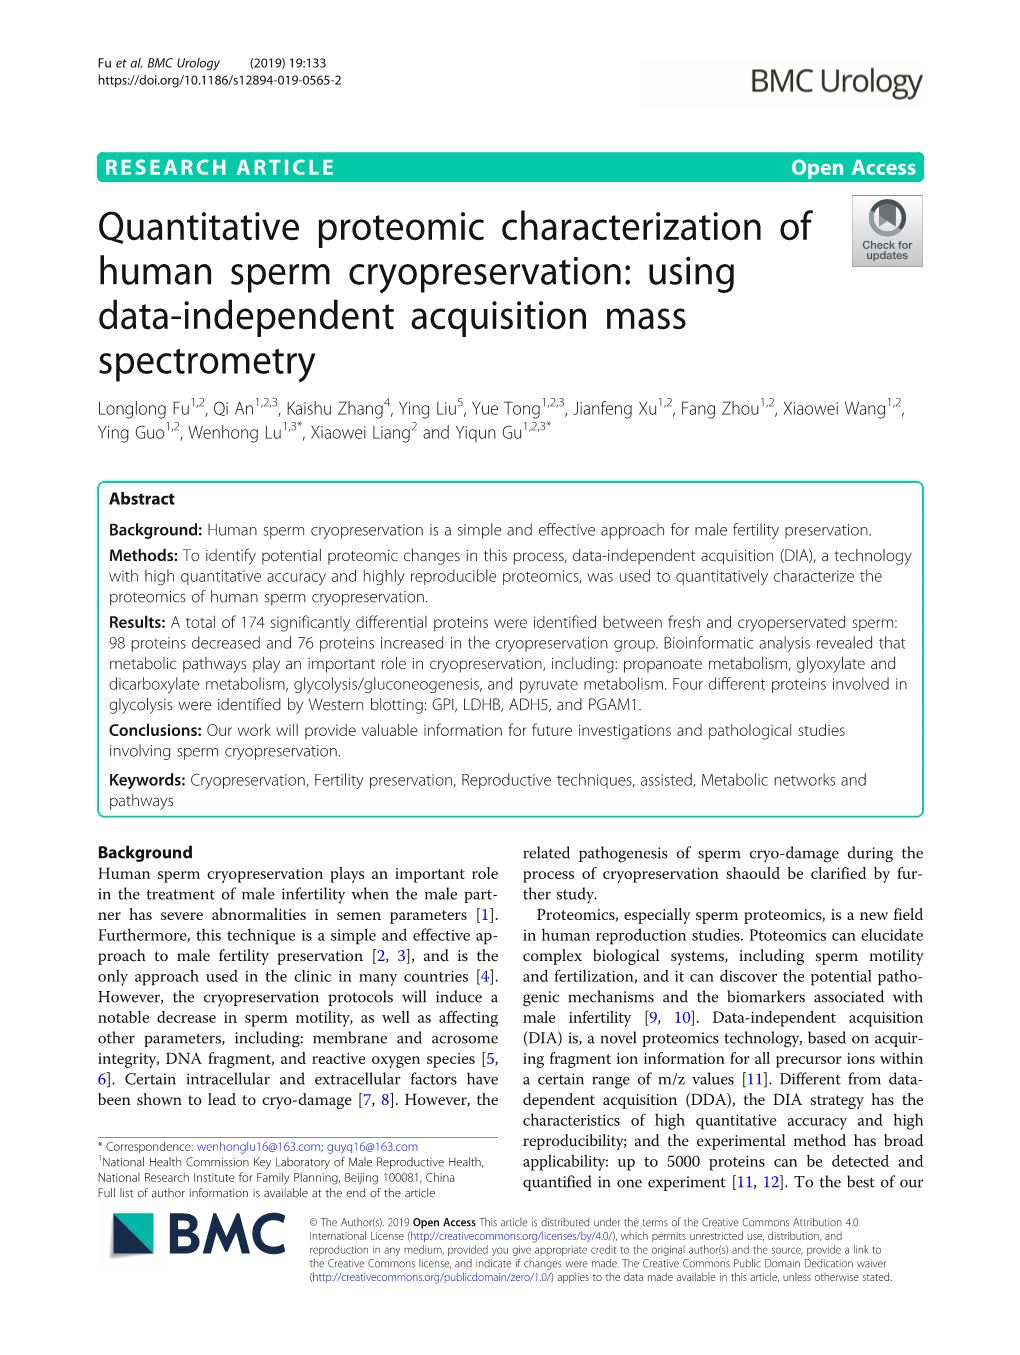 Quantitative Proteomic Characterization Of